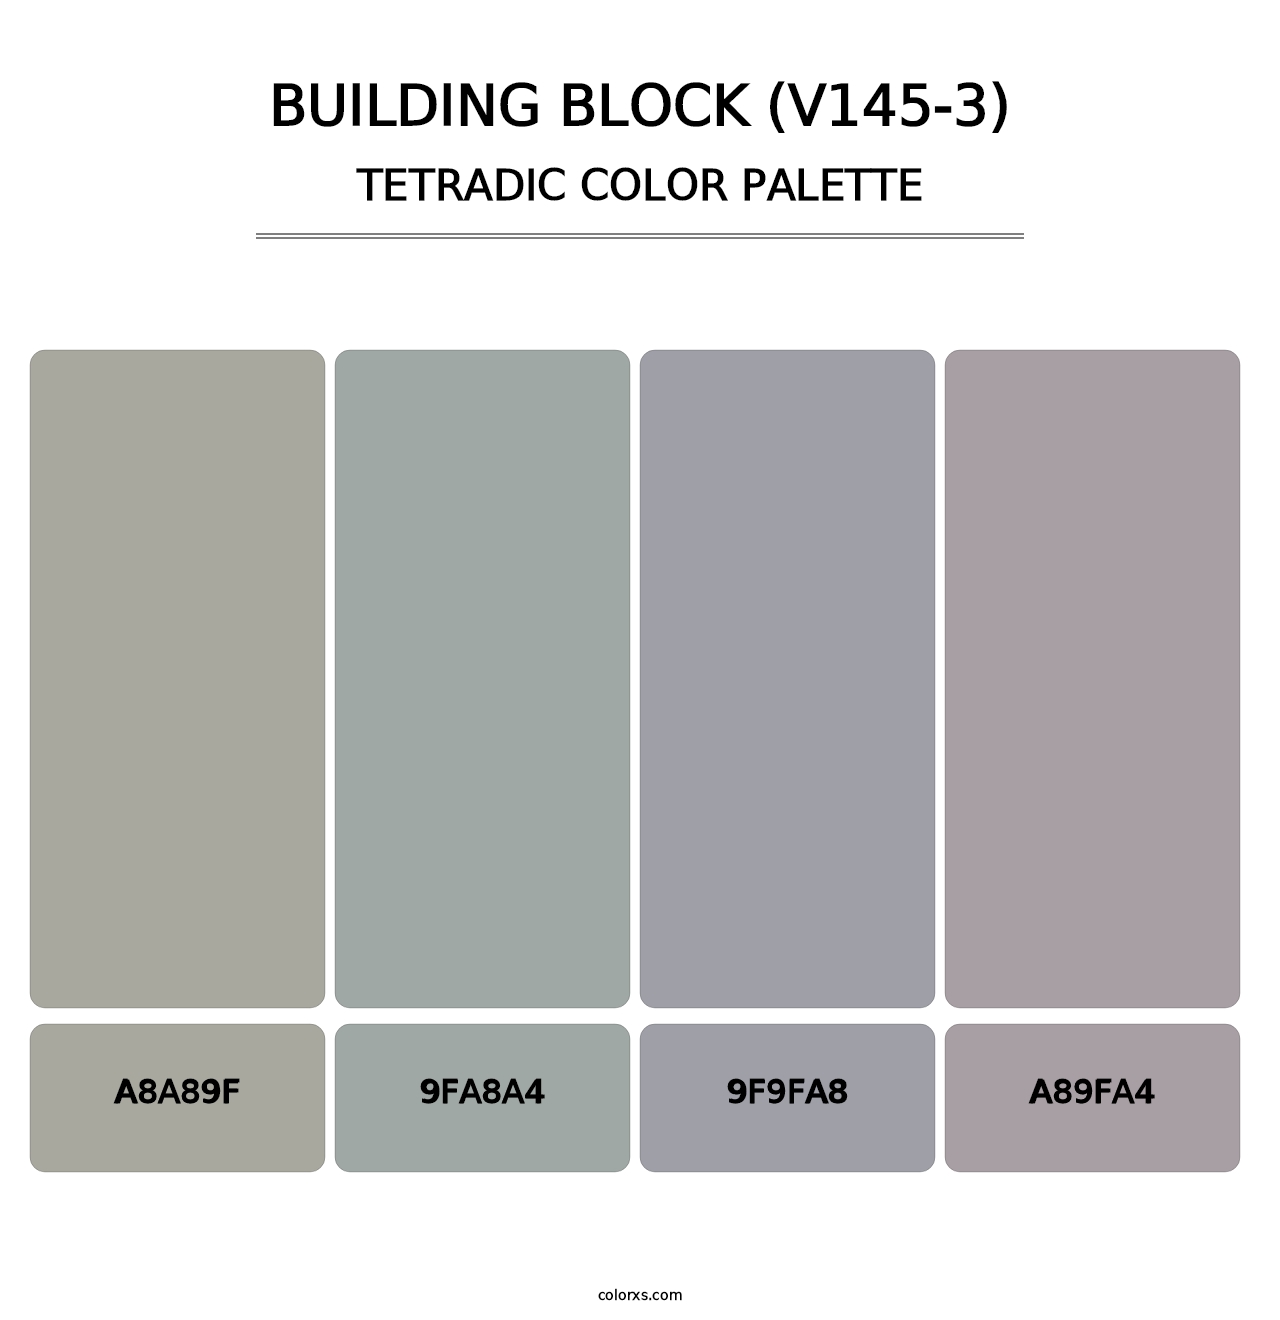 Building Block (V145-3) - Tetradic Color Palette